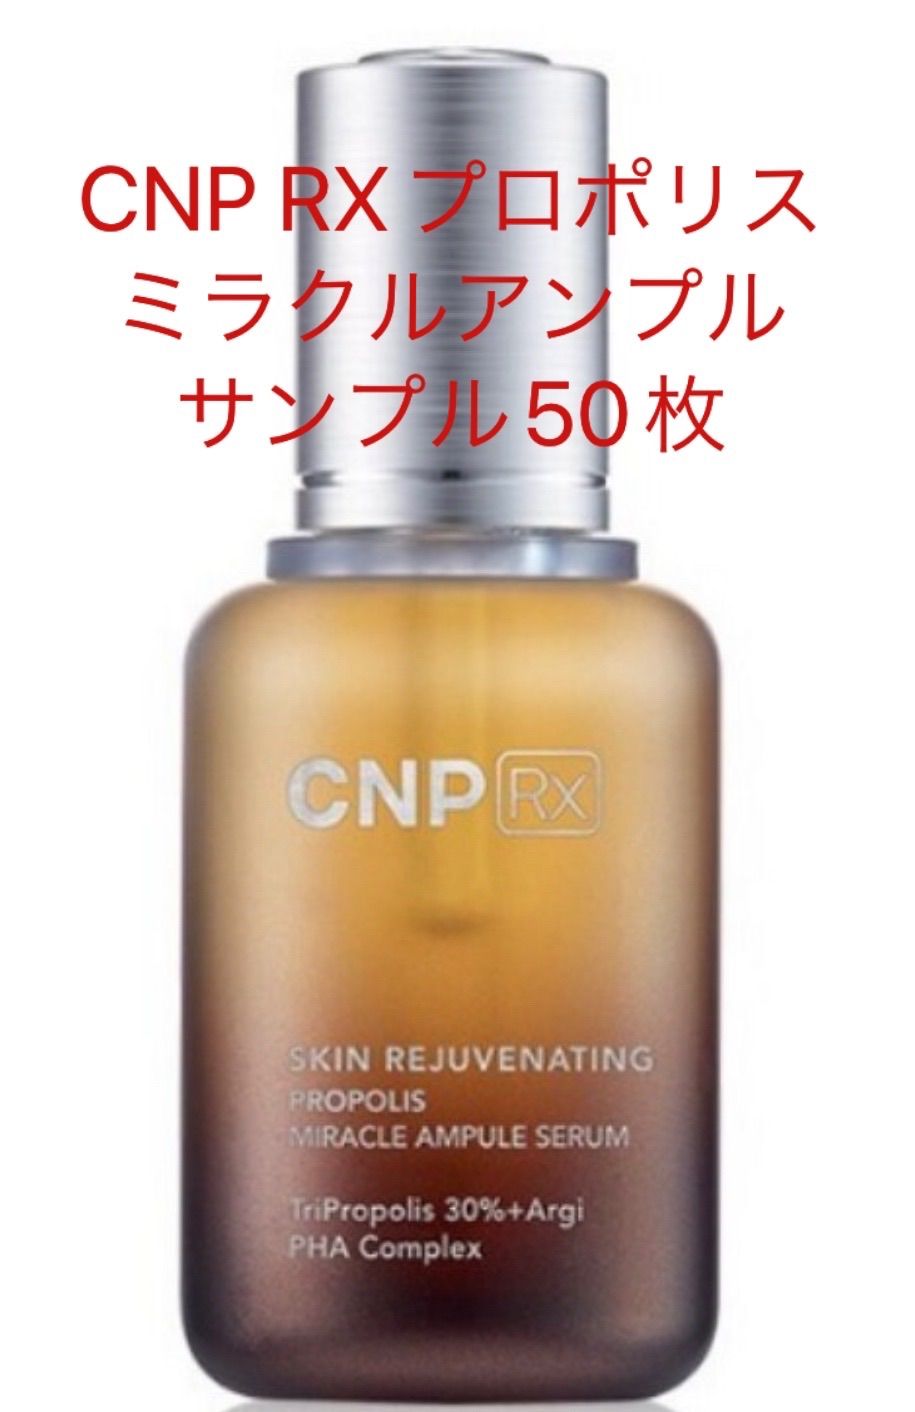 CNP Rx ザ スプリマシー リニュー  クリーム 1ml ×60